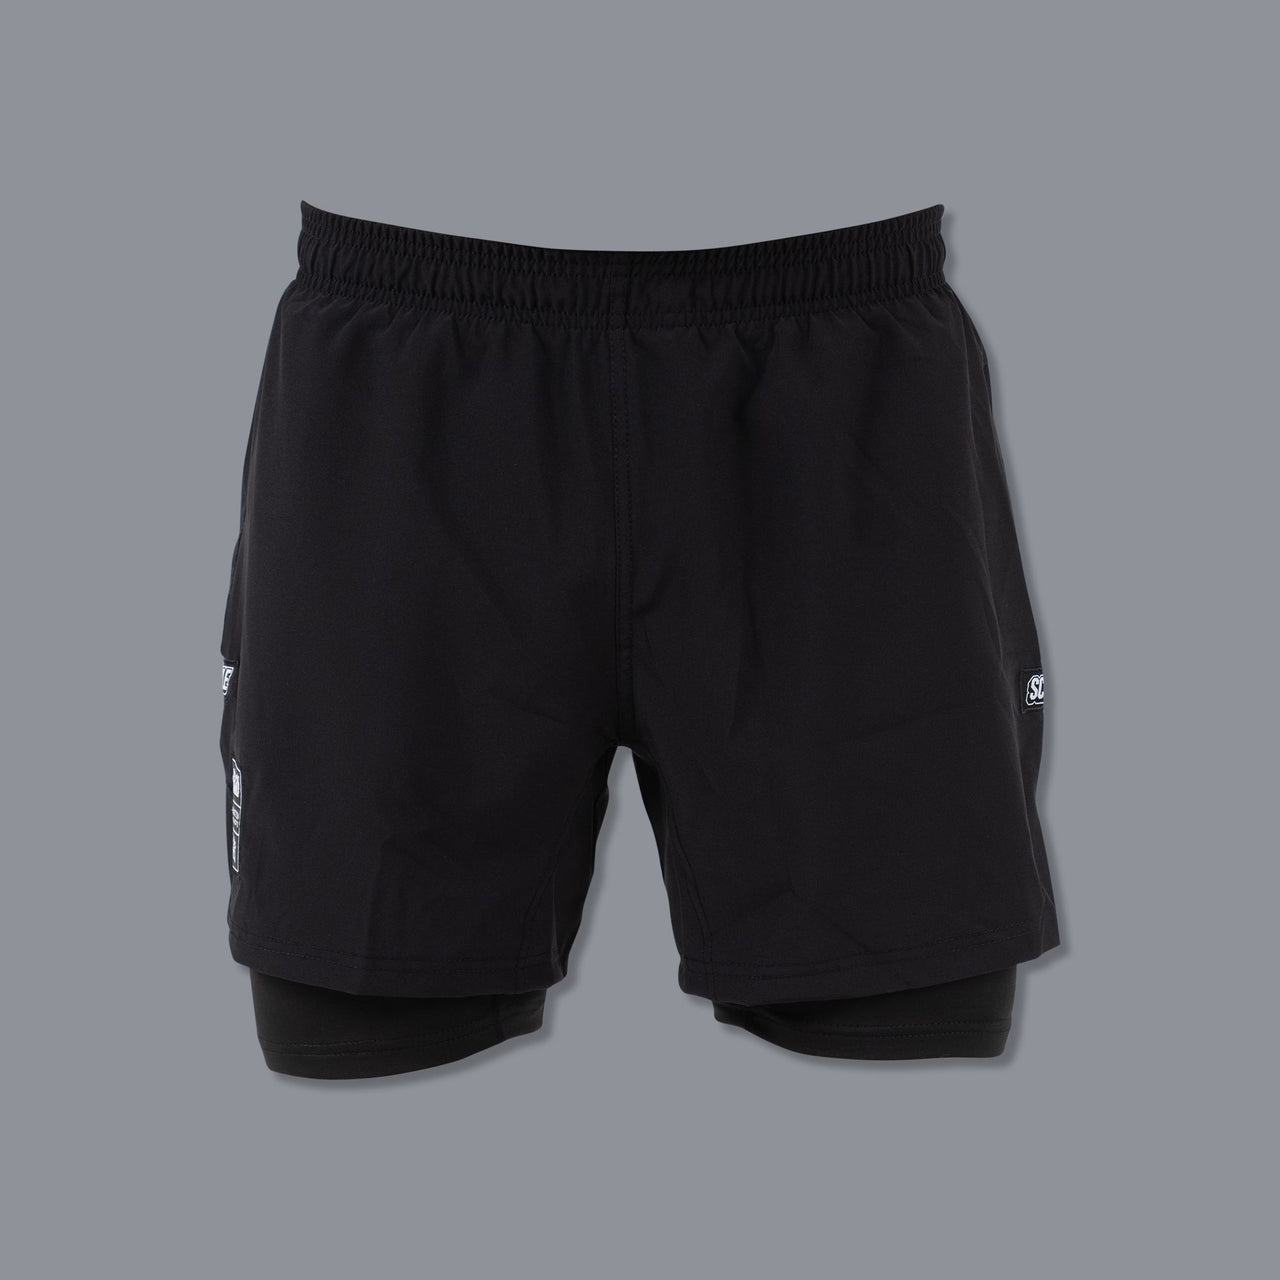 Scramble Combination Shorts - Black/Black